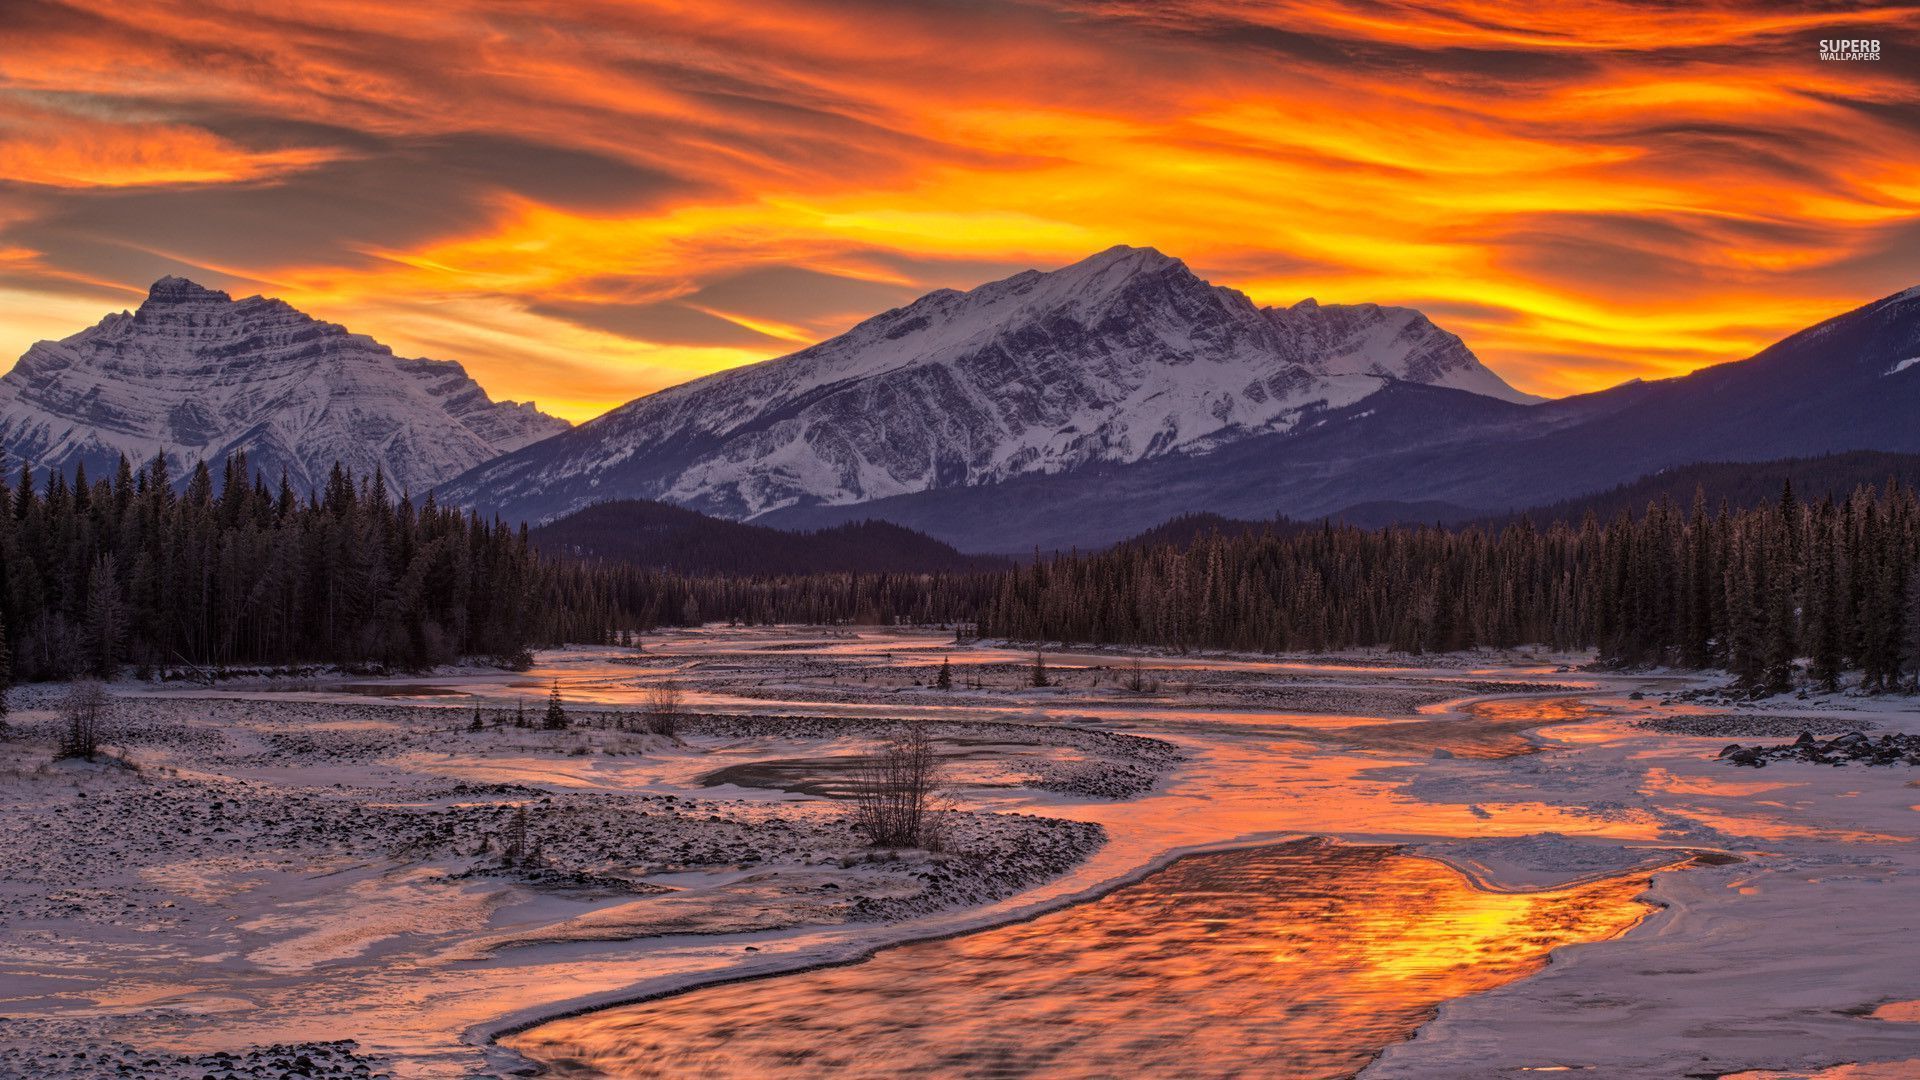 Inter Mountain Sunset HD Wallpaper Background Image